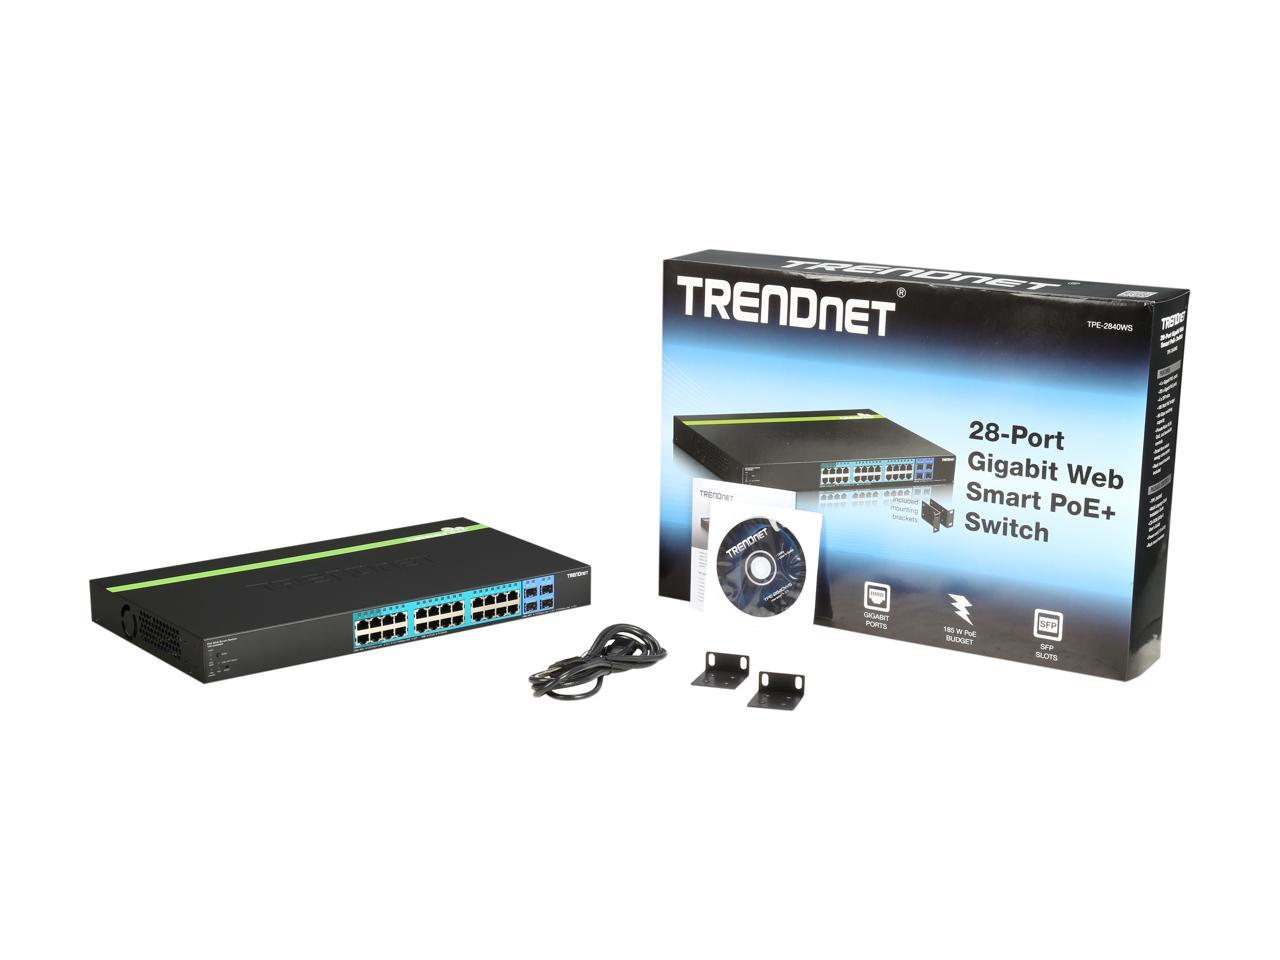 TRENDnet TPE-2840WS 28-Port Gigabit Web Smart PoE+ Switch. Limited Life Time Warranty